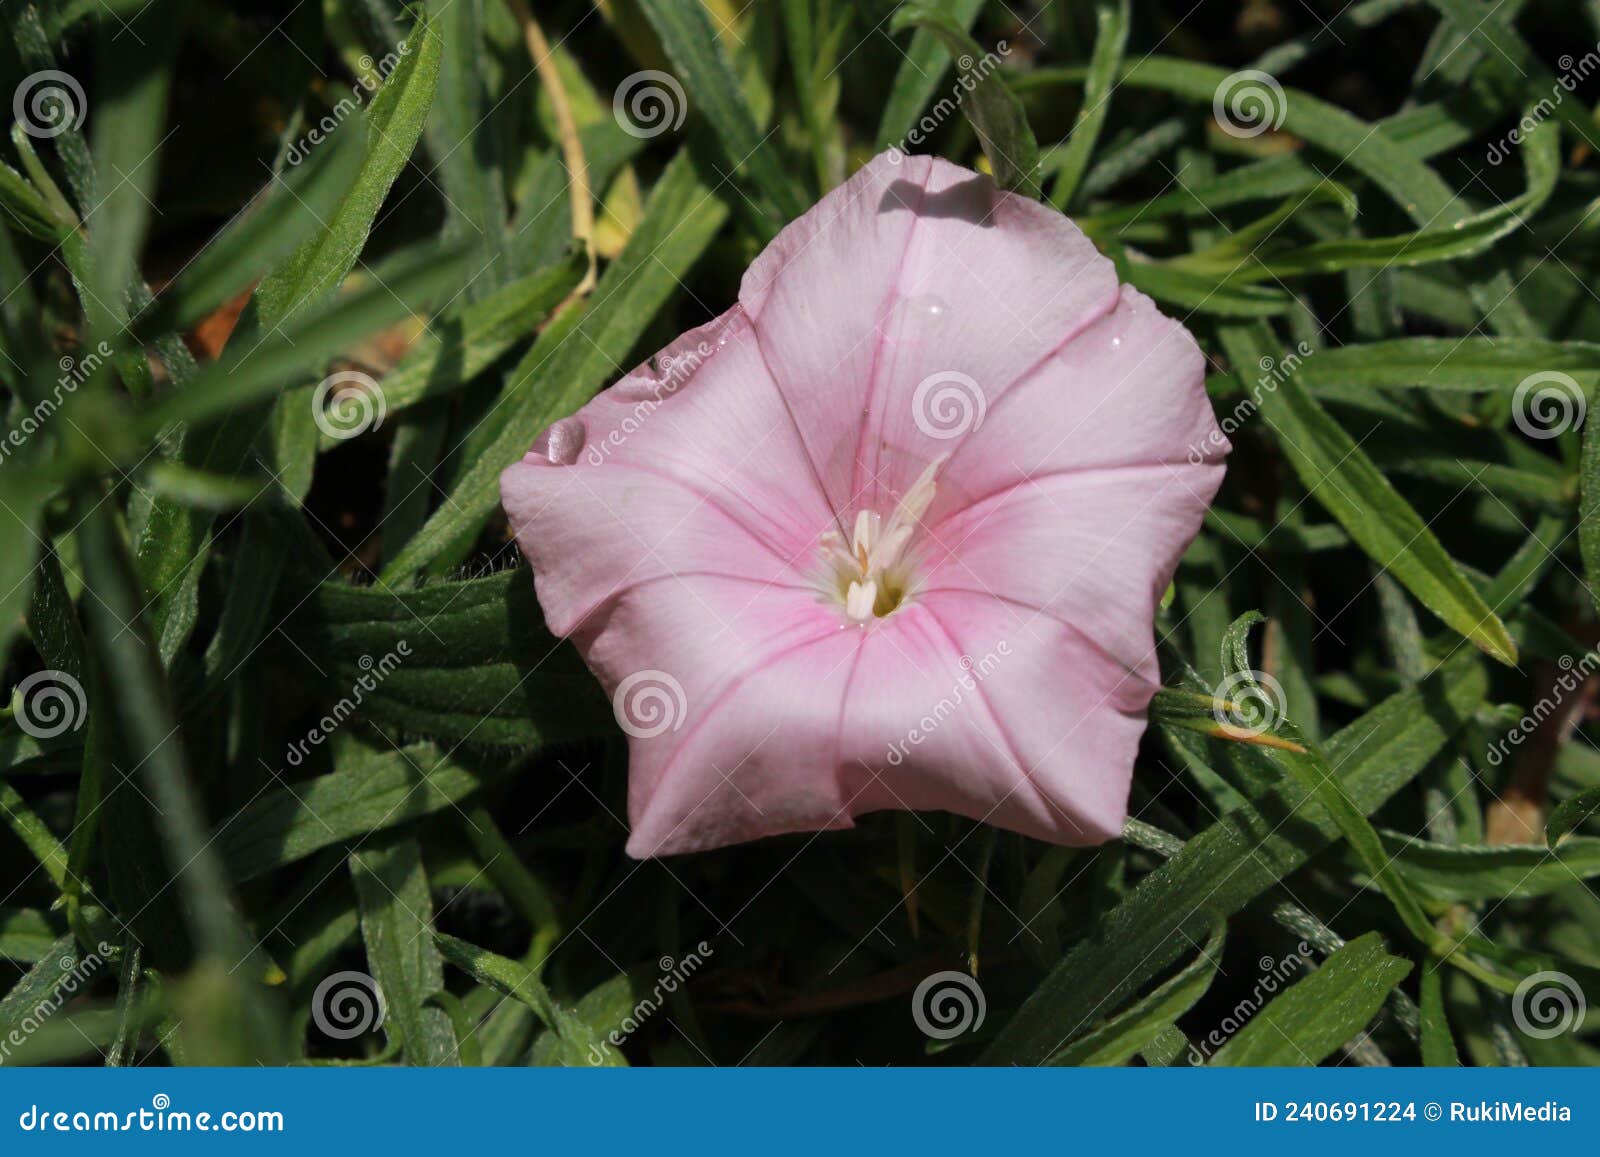 `cantabrican morning glory` flower - convolvulus cantabrica